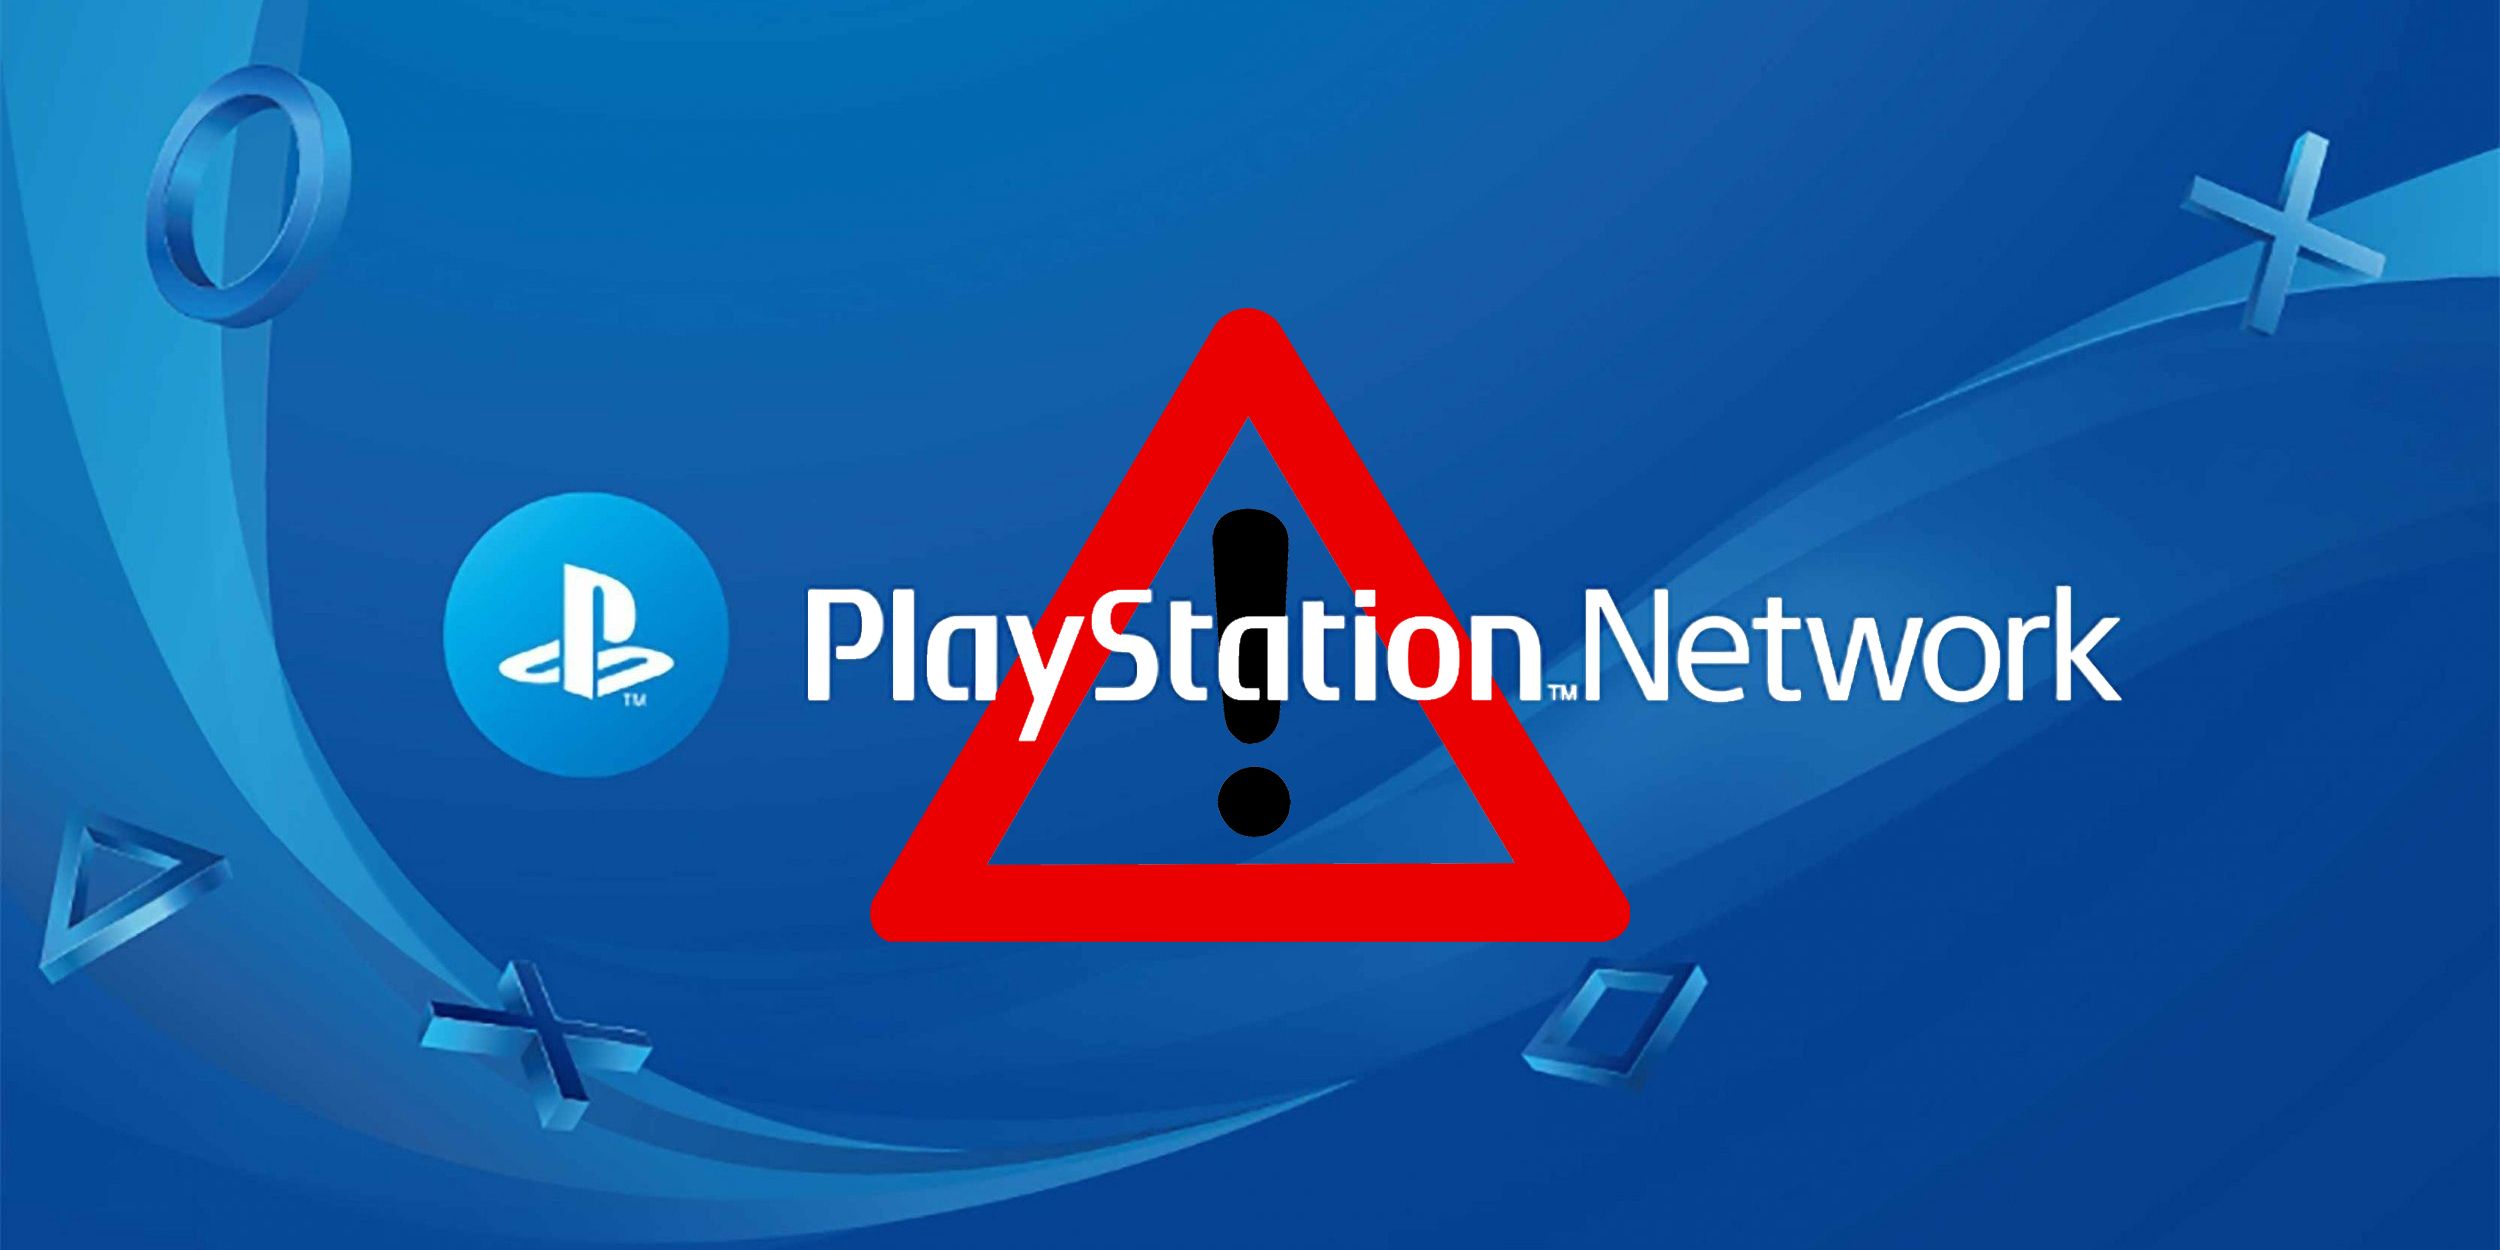 psn playstation network logo with caution symbol